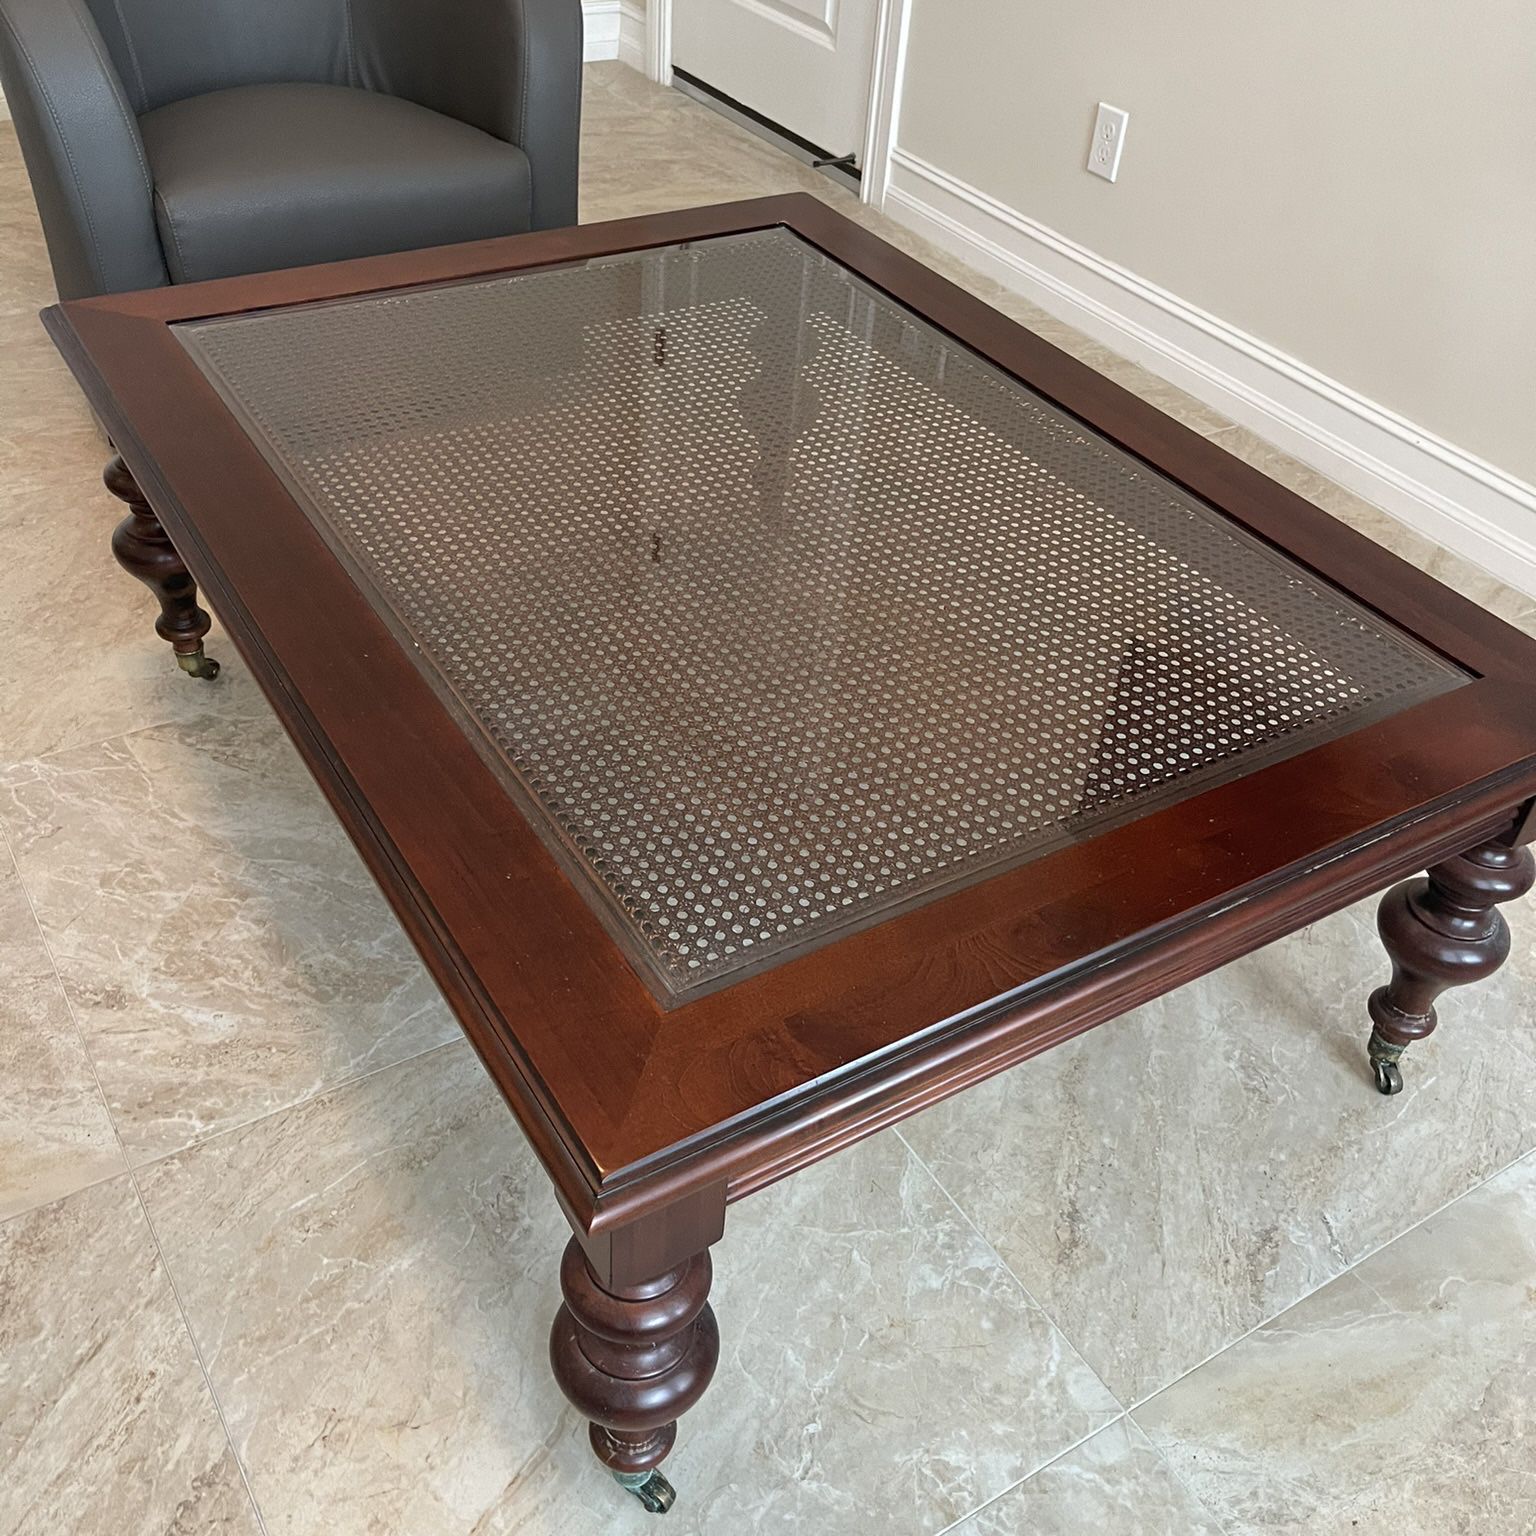 Beautiful Wood Coffee Table - Originally $850. - 49” x 37”  - Asking $35